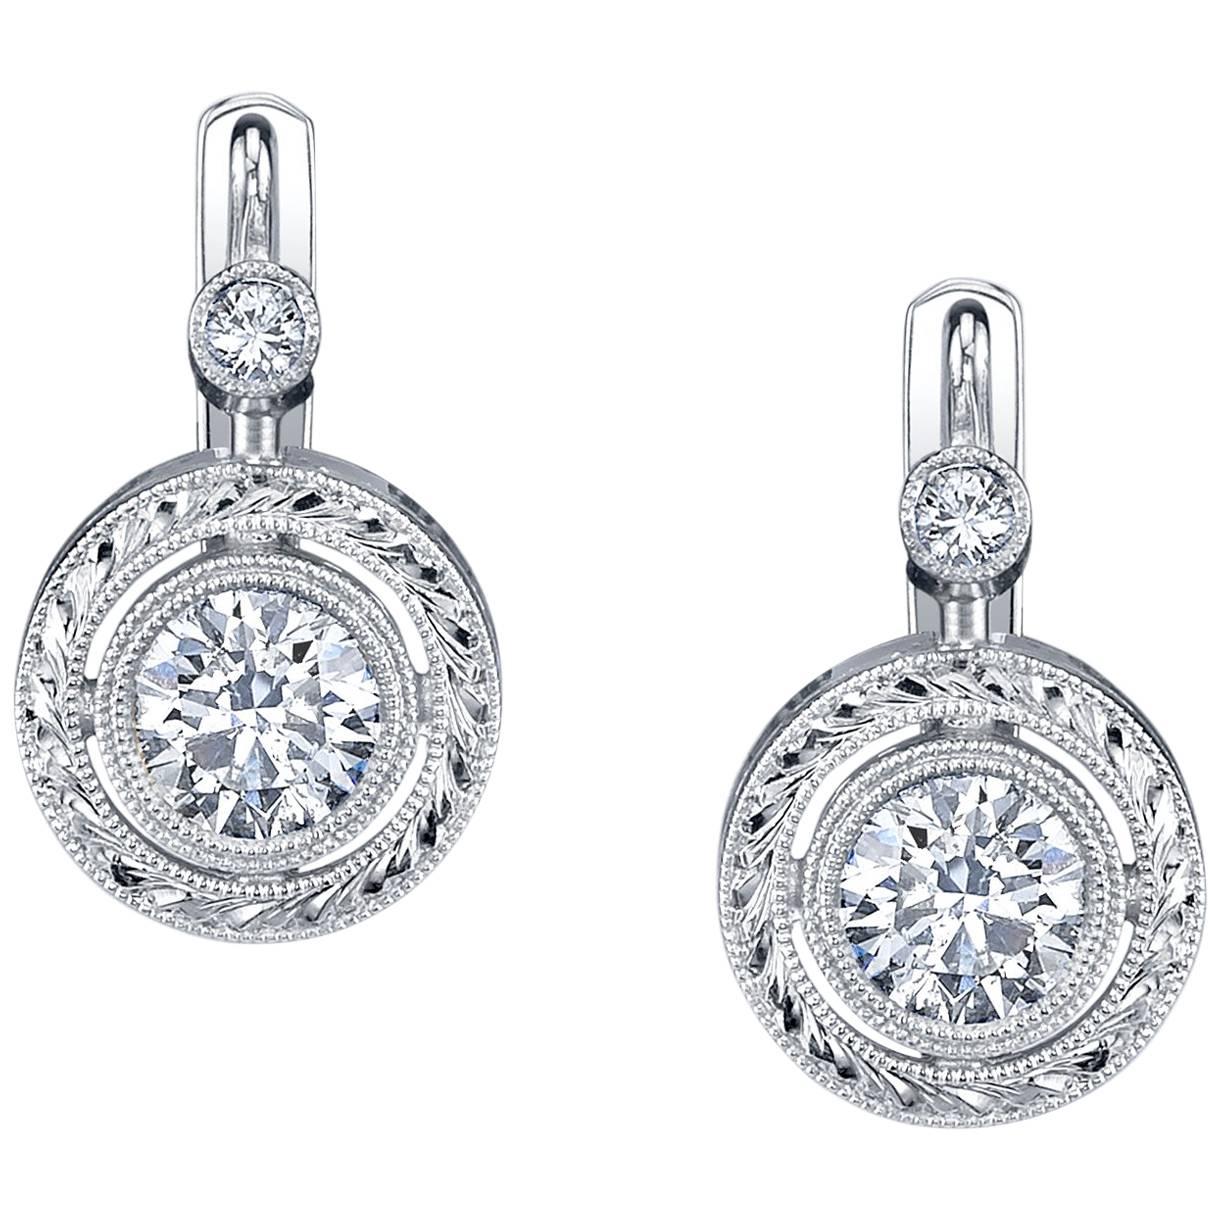 Diamond Drop Earrings in Engraved 18k White Gold, .56 Carat Total 